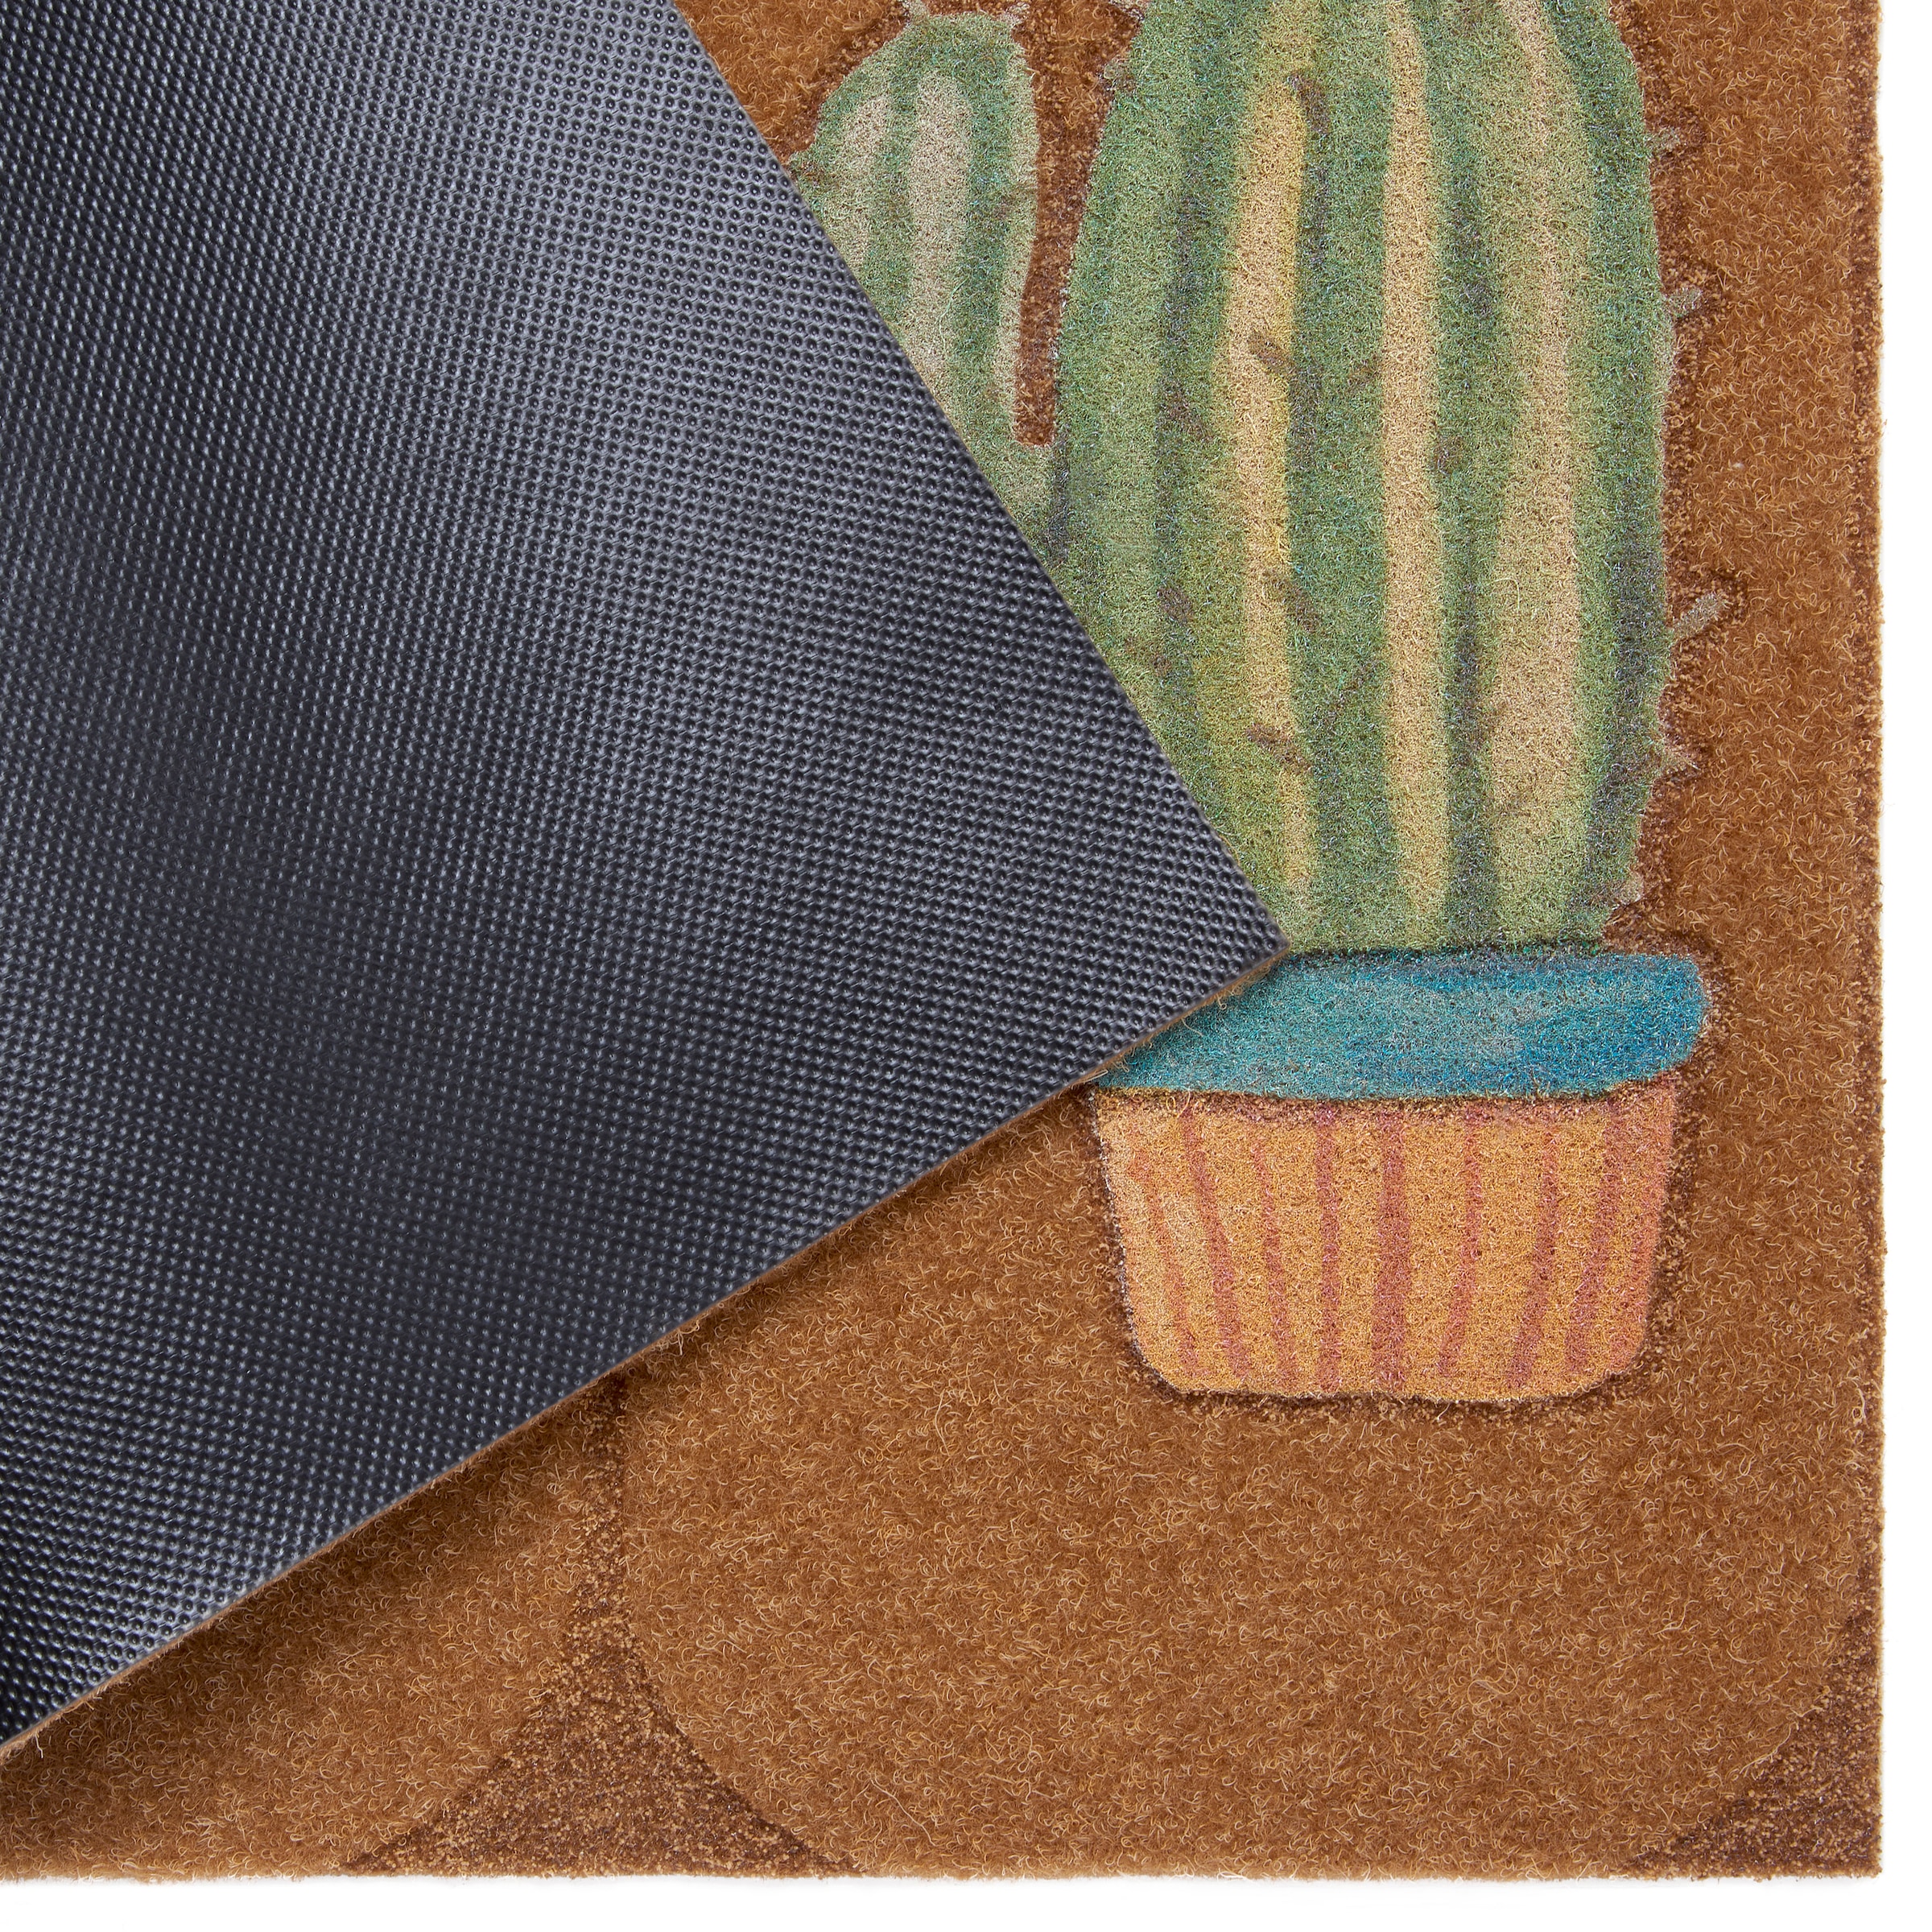 my home Fußmatte »Kaktus«, rechteckig, Kokos-Look, Robust, Pflegeleicht, Rutschfest, Farbenfroh, Schmutzfang